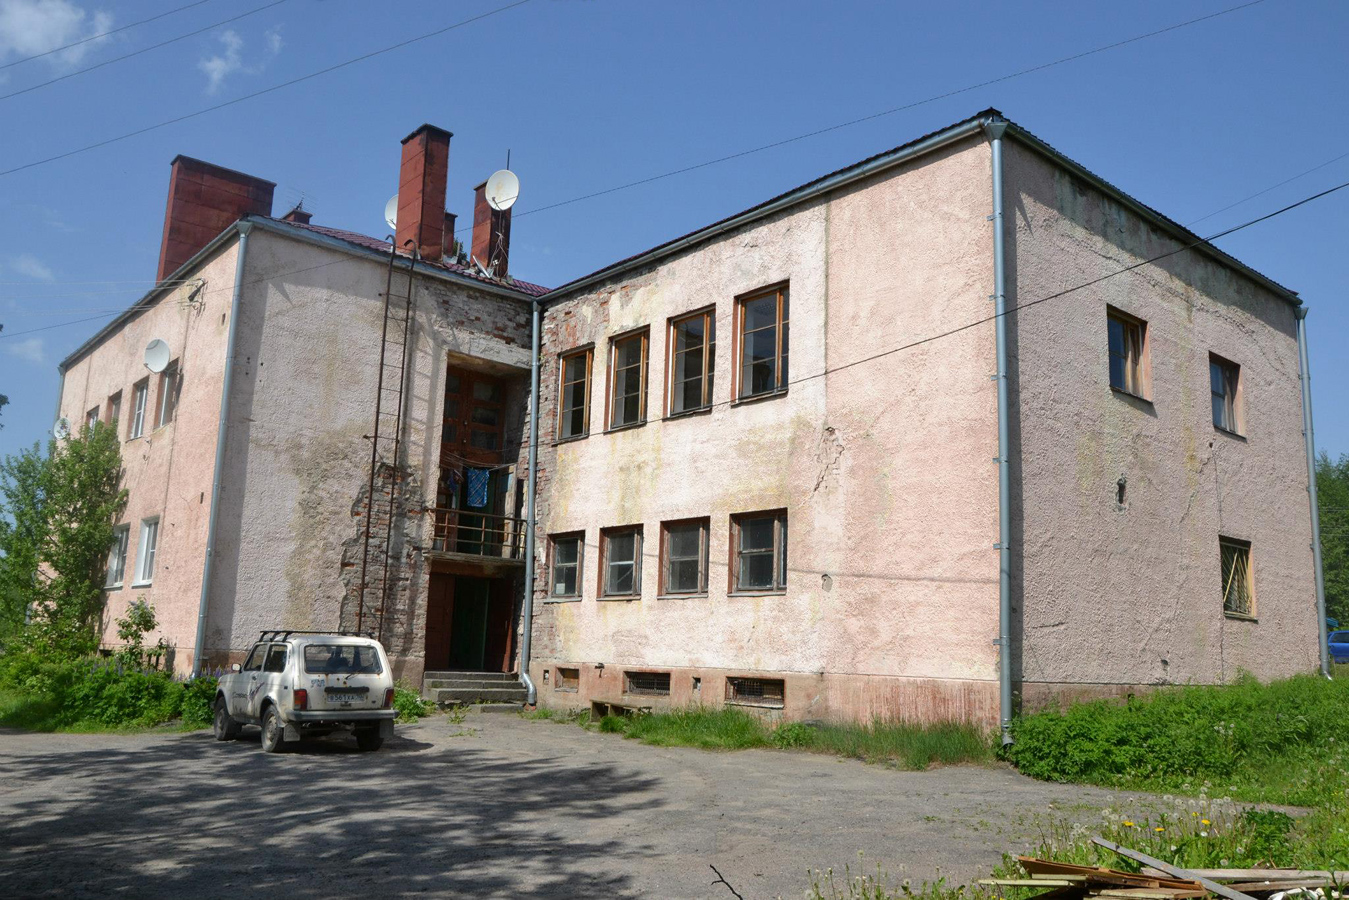 2014. Jaakkima. Former commune office